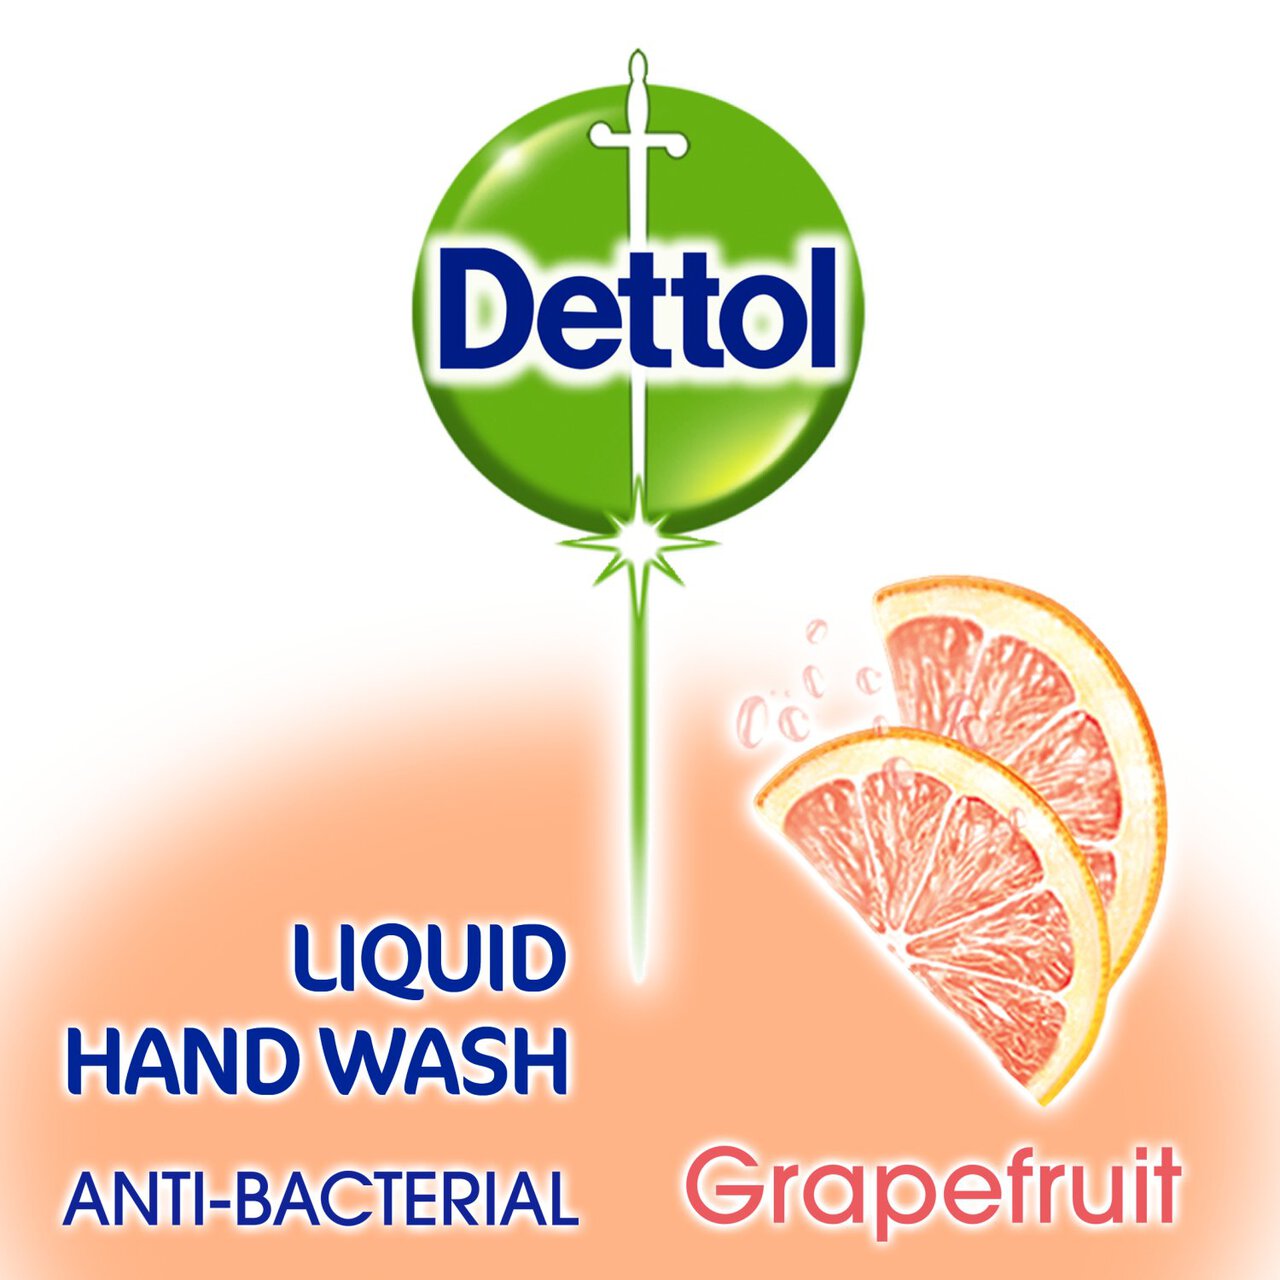 Dettol Refresh Antibacterial No-Touch Refill Liquid Hand Wash Grapefruit 250ml